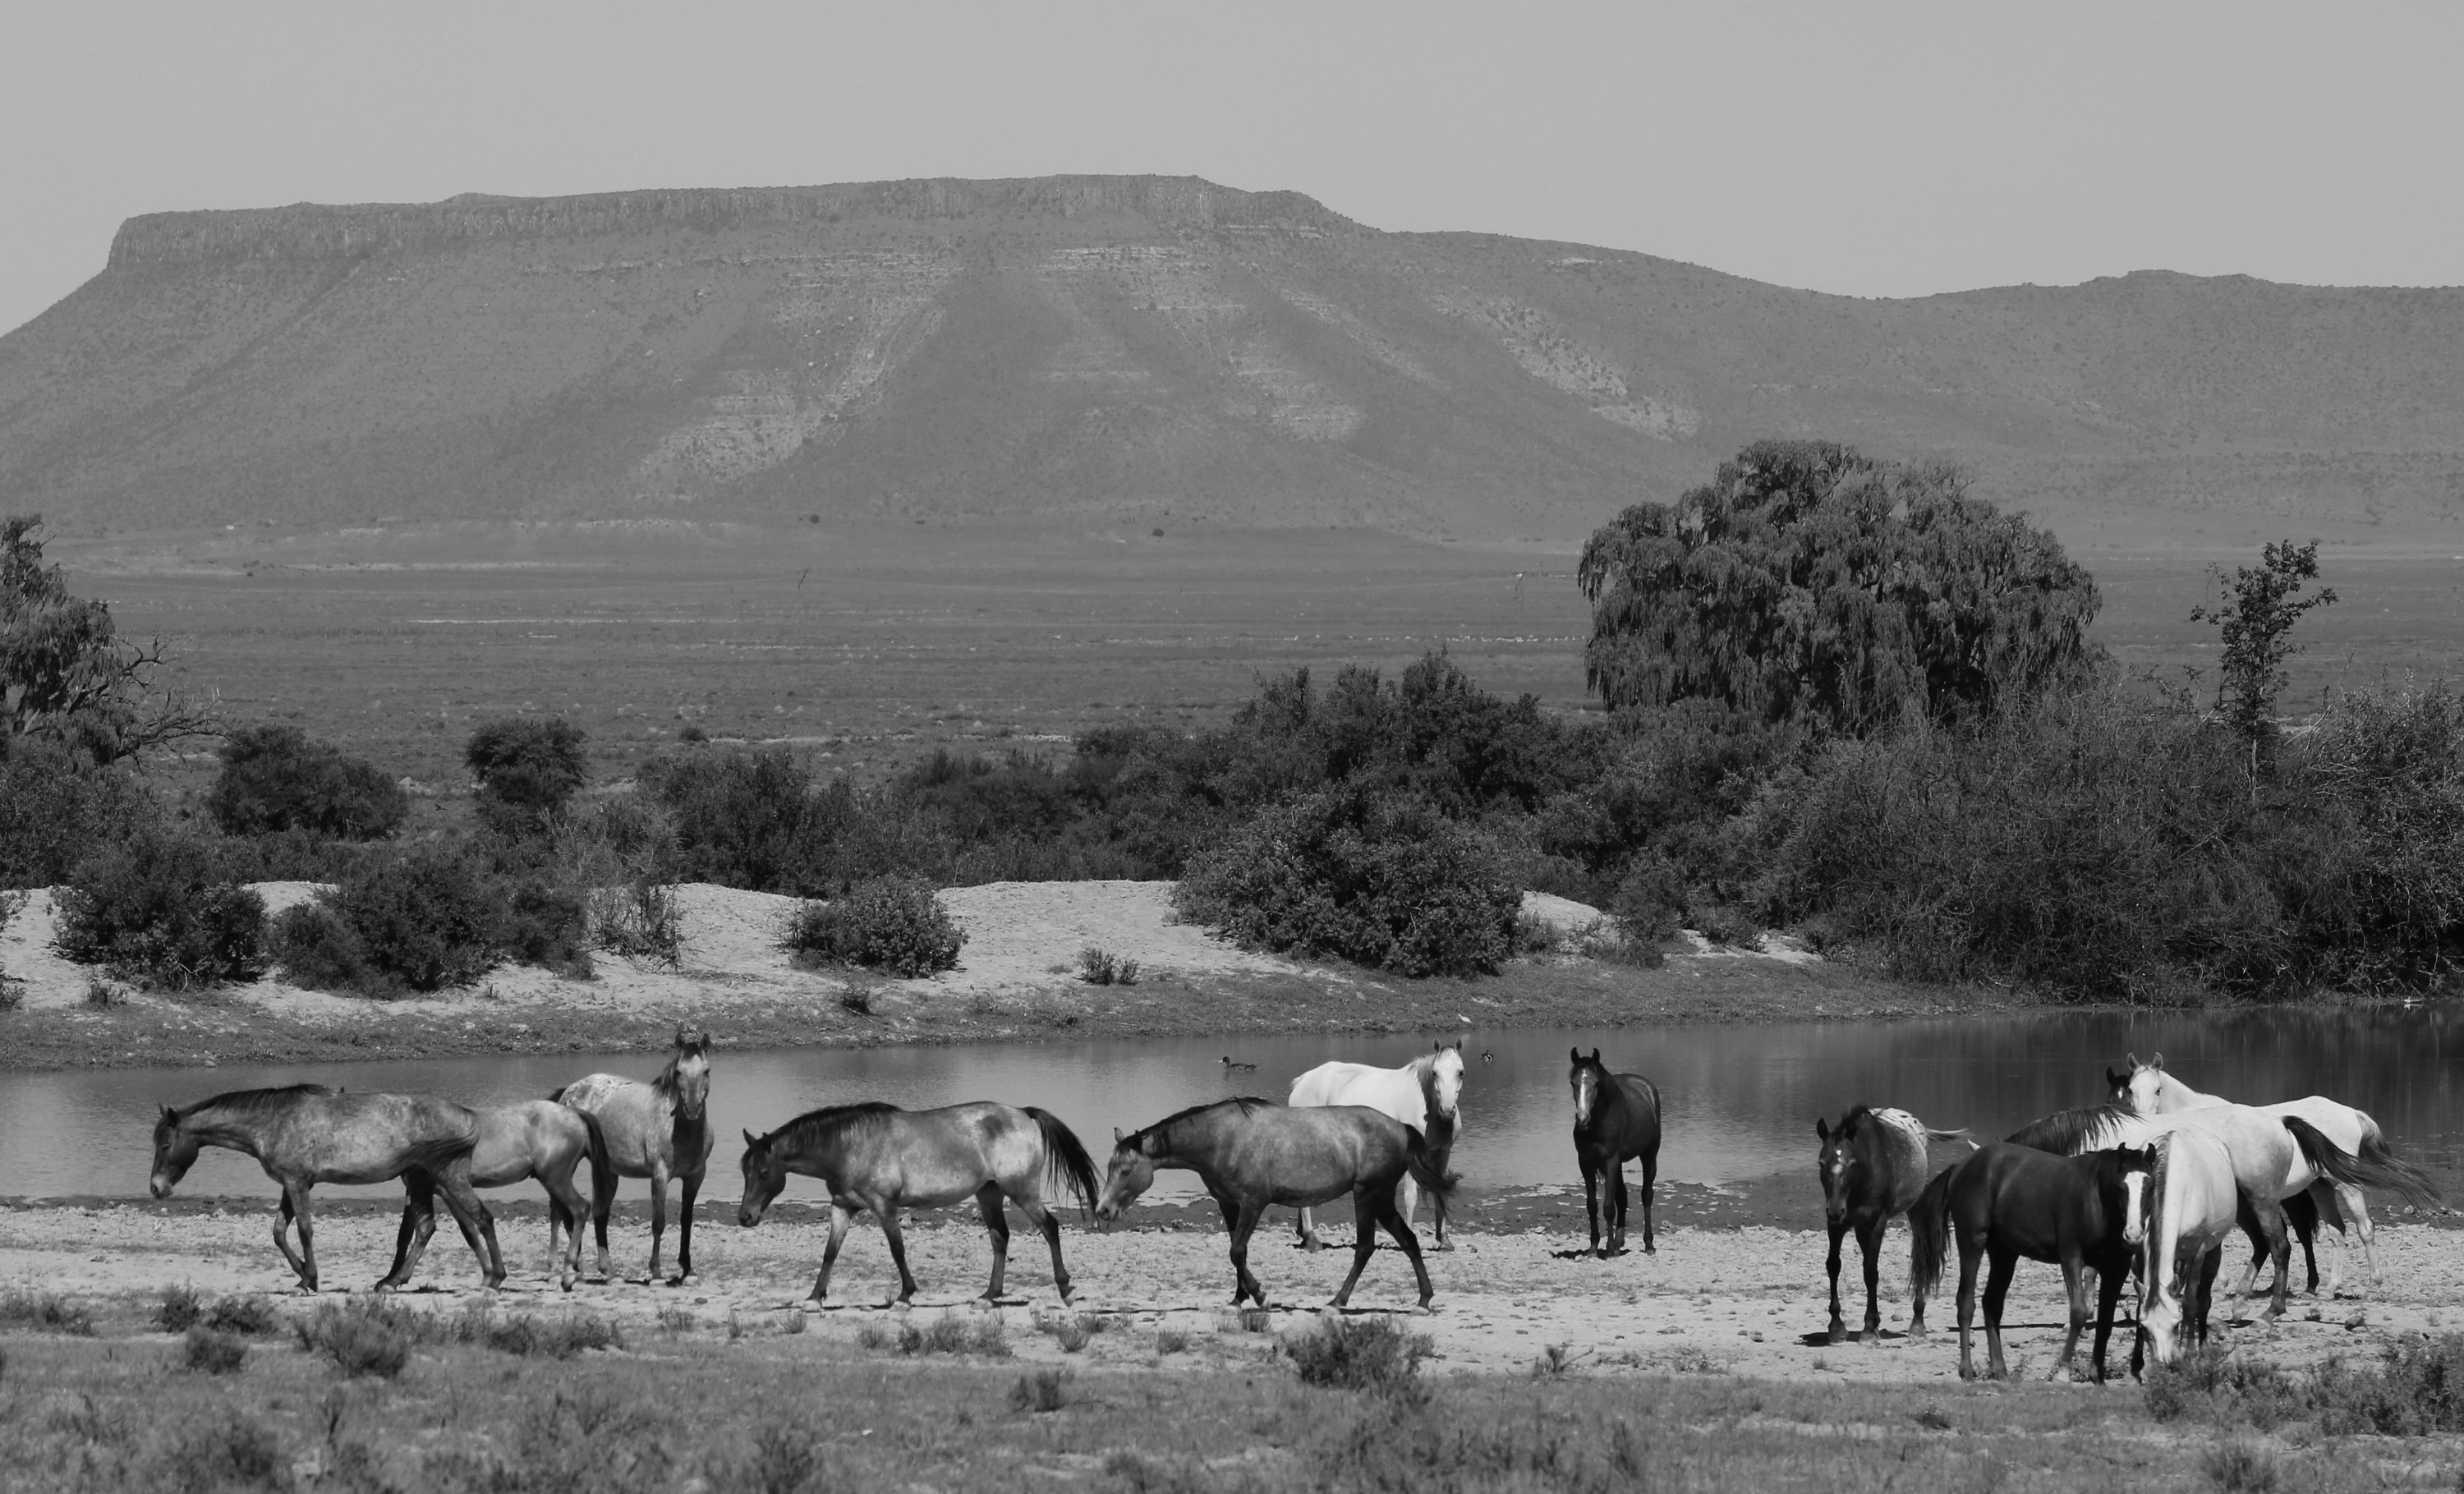 Gelykfontein Specials in their natural Karoo setting. Image: Chris Marais 